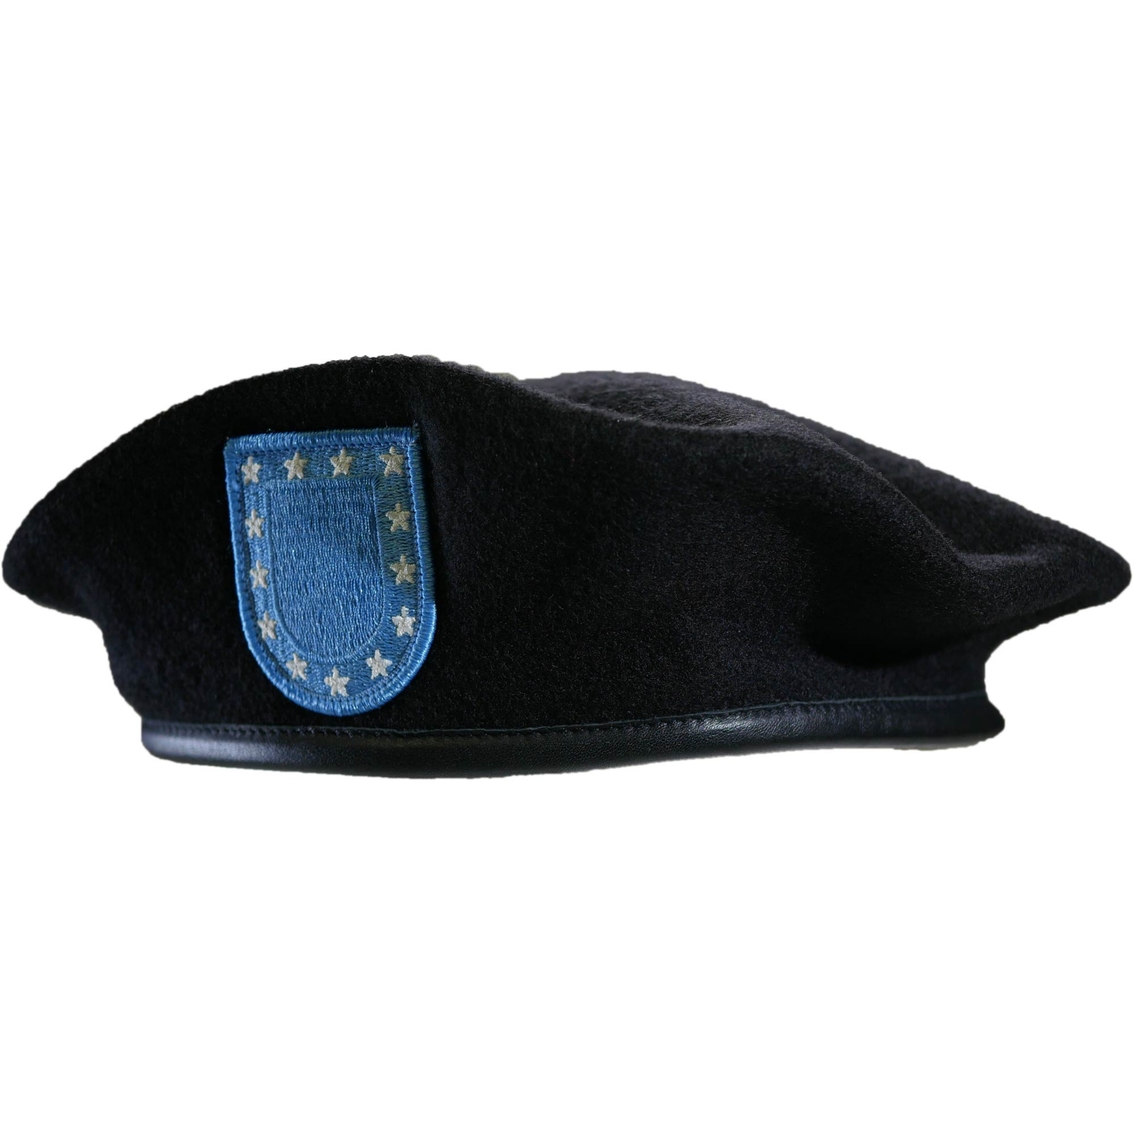 Kingform Cap Company, Inc. Army Black Beret - Image 2 of 2